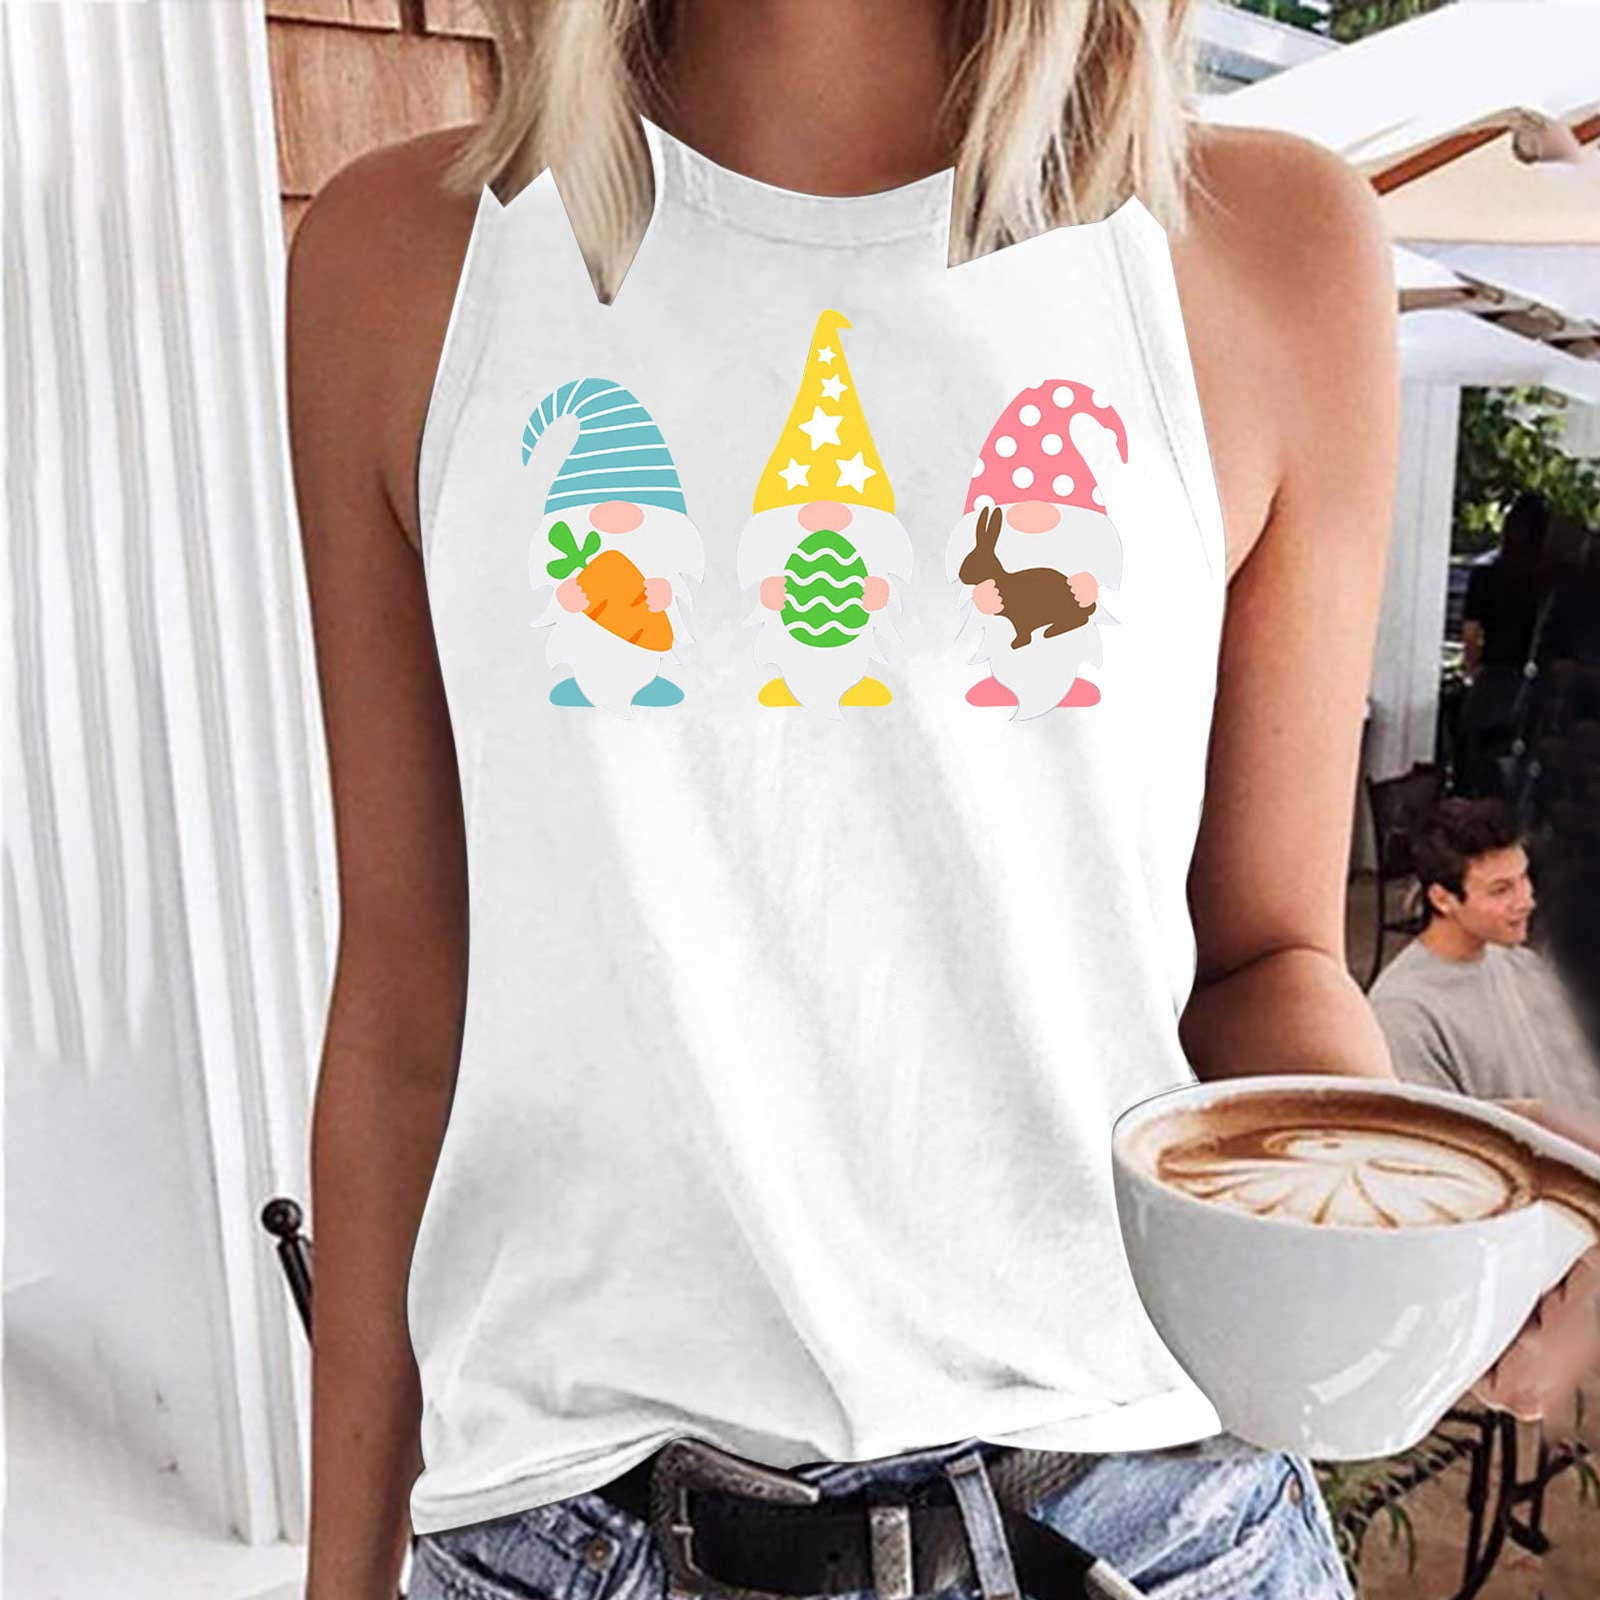 pbnbp Tank Top For Women Leopard Rabbit Tees Crewneck Sleeveless Casual  Summer Vest Tops Fashion Happy Easter T-Shirt